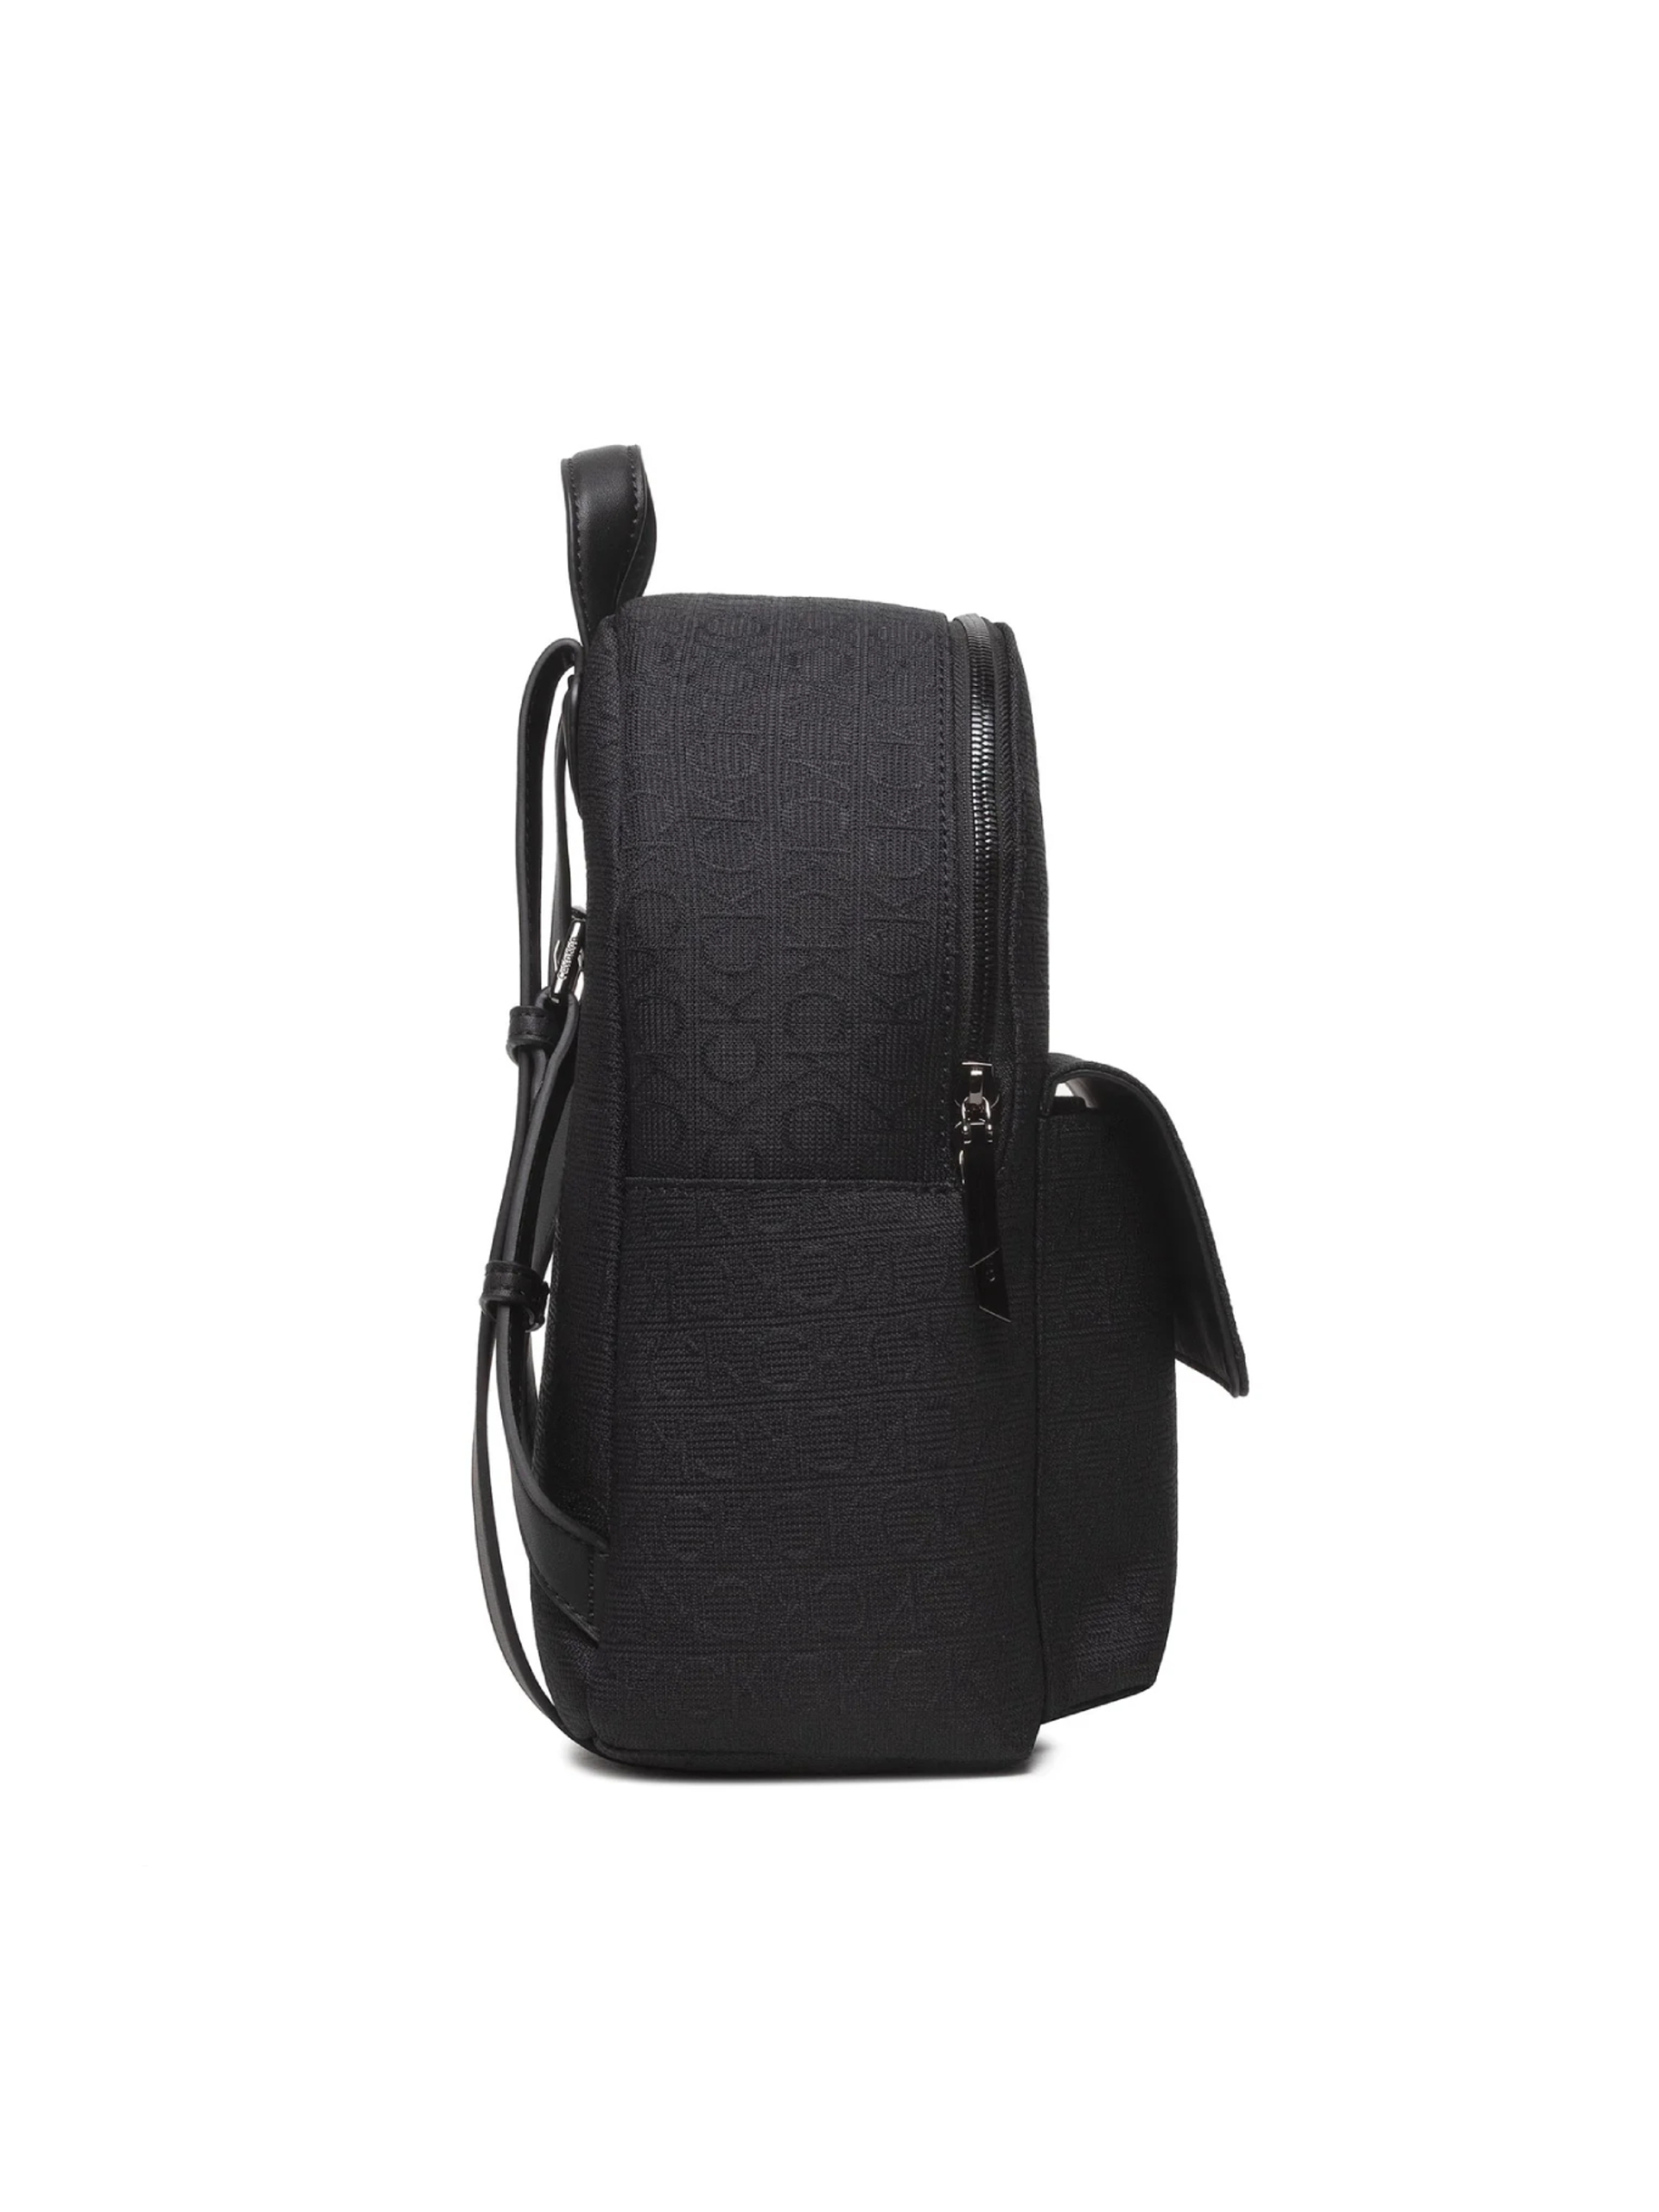 Calvin Klein dámský černý batoh - OS (BAX)